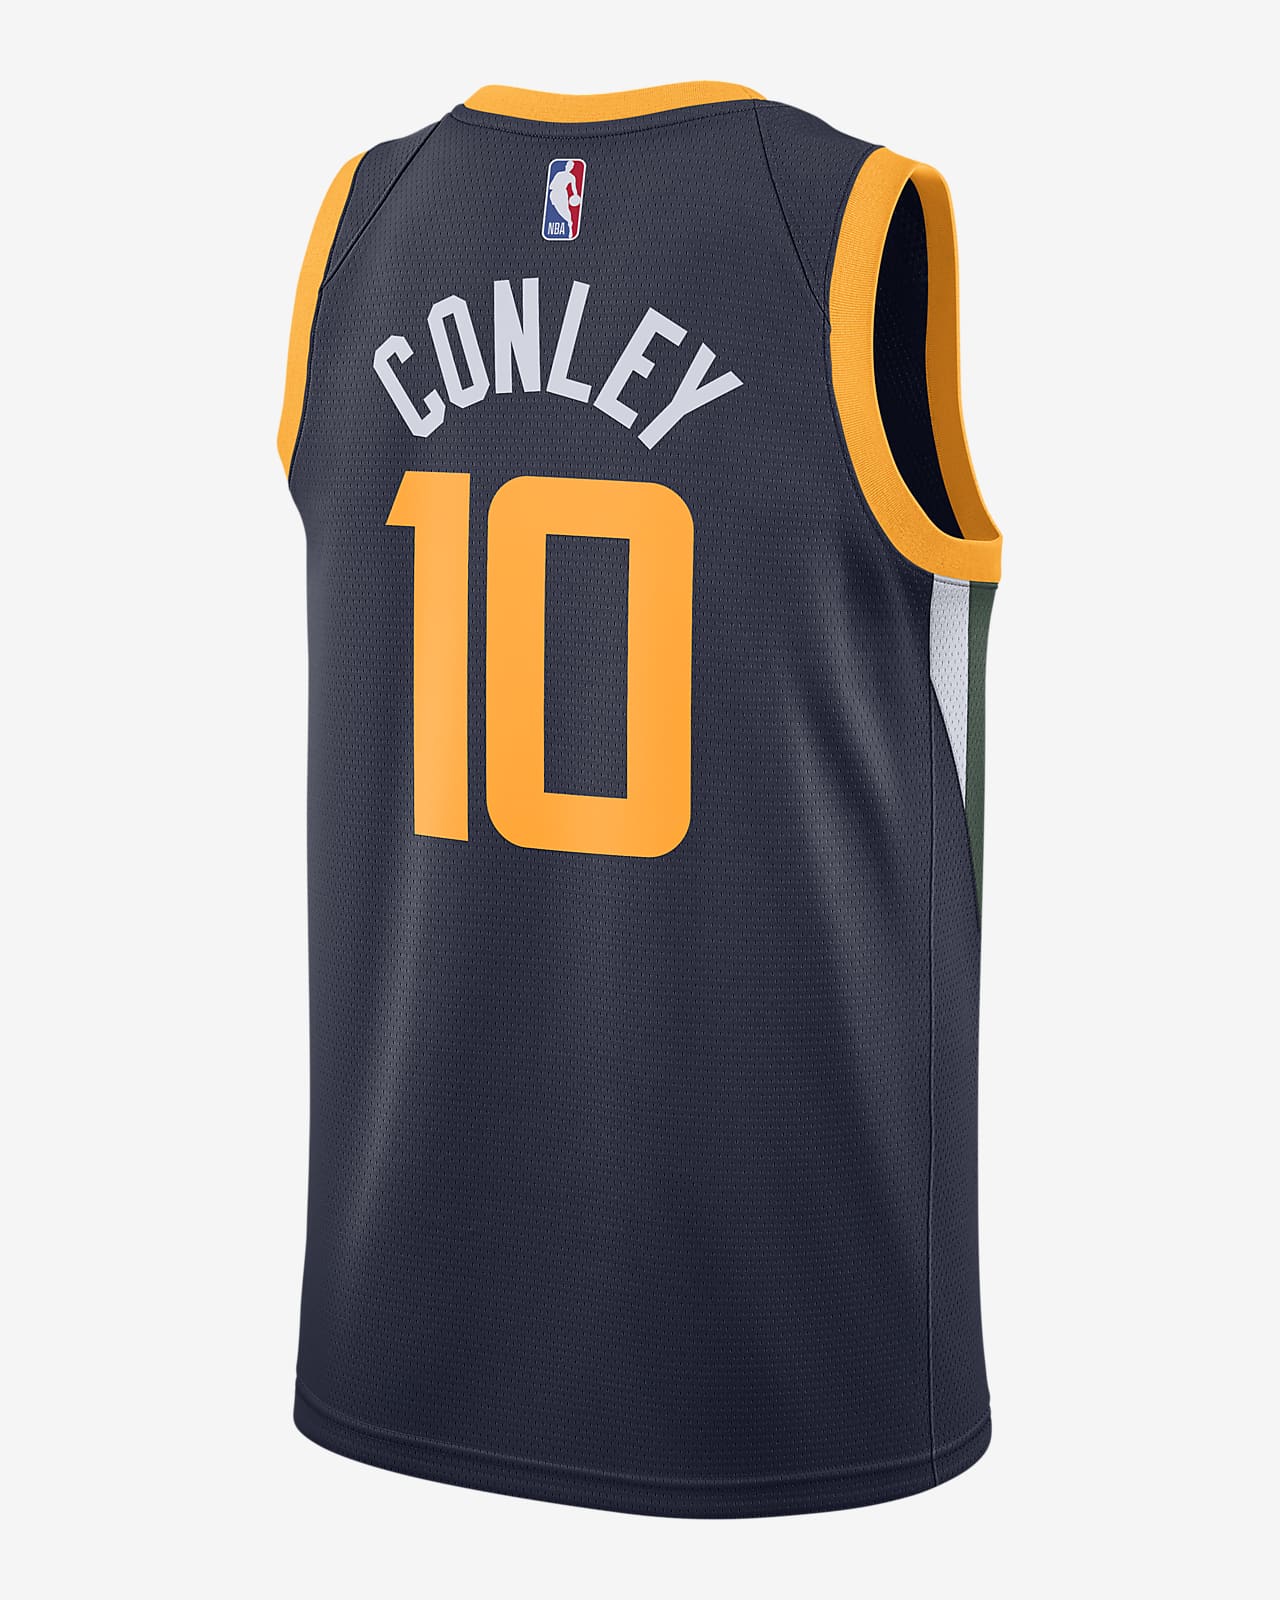 Camiseta Nike NBA Mike Conley Jazz Icon Edition 2020. Nike.com